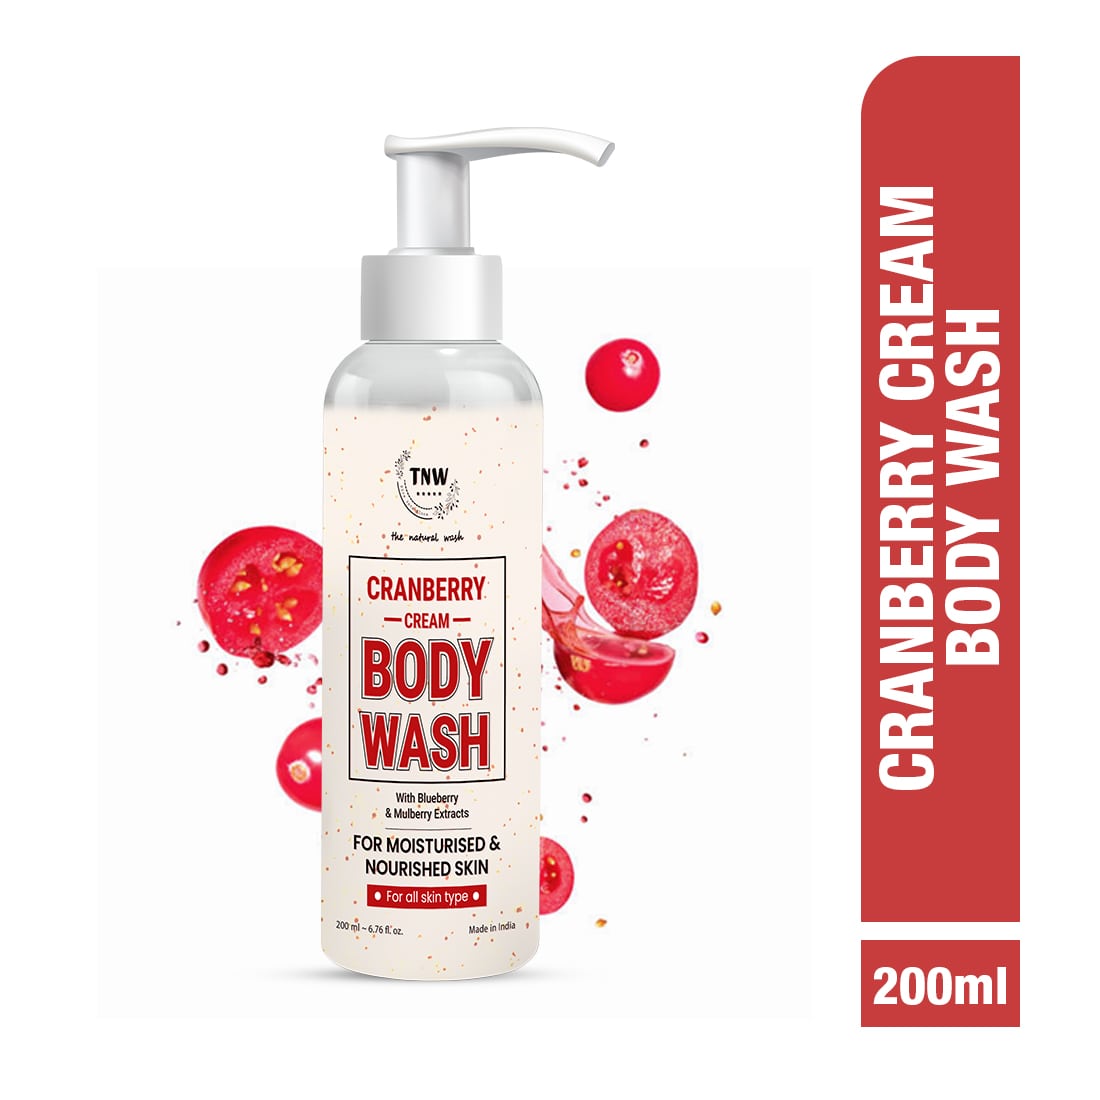 Cranberry Cream Body Wash For skin brightening & skin nourishment